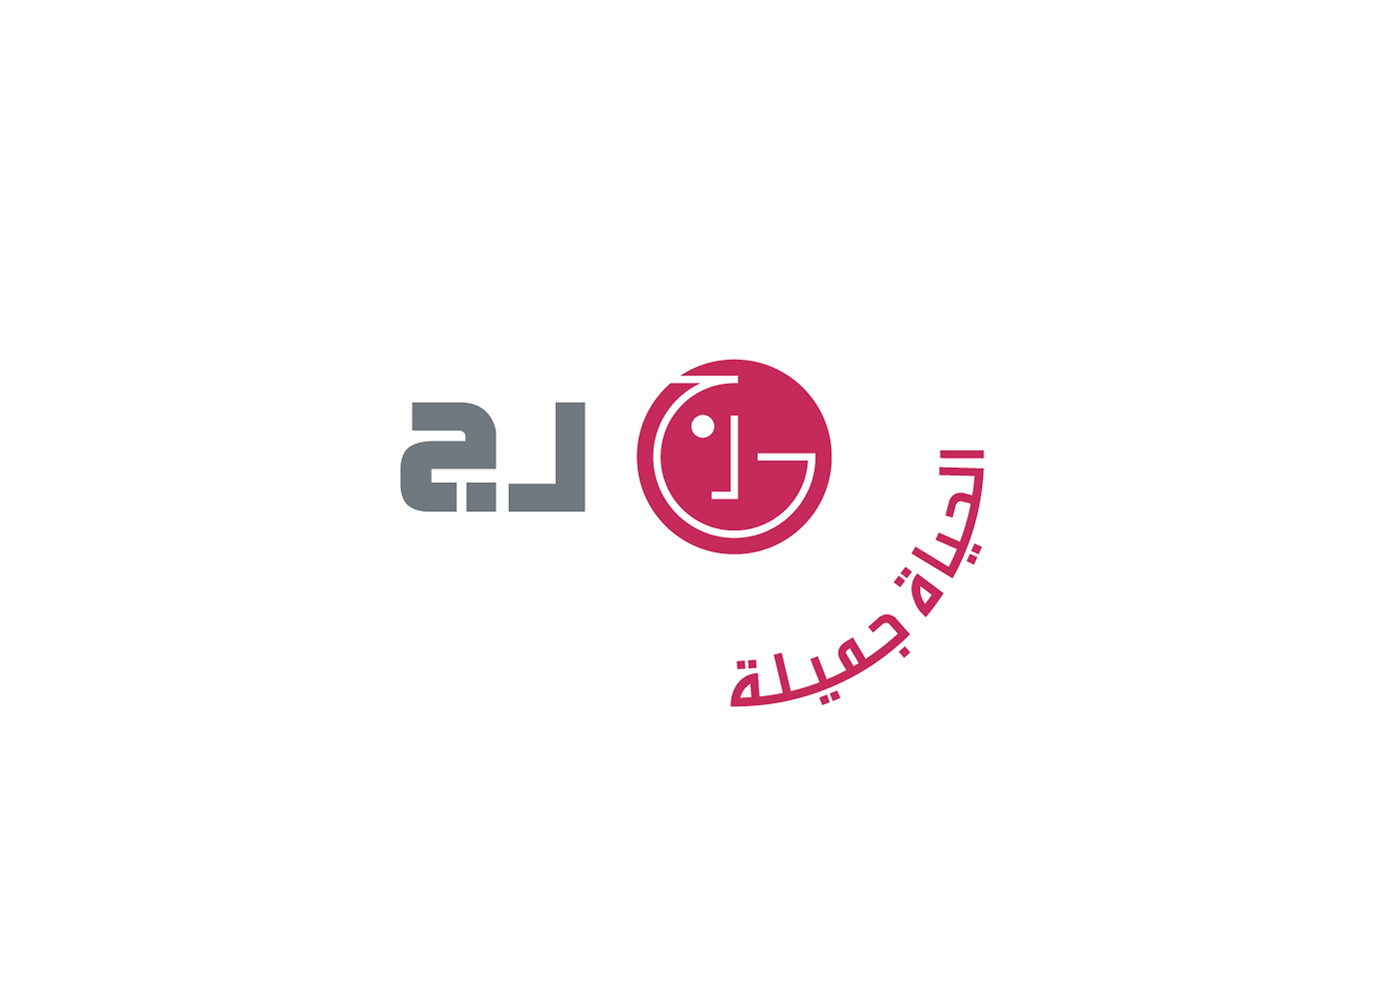 famous logos arabic translation language Arab Kuwait social media Website brand uplifting creative concept clever idea